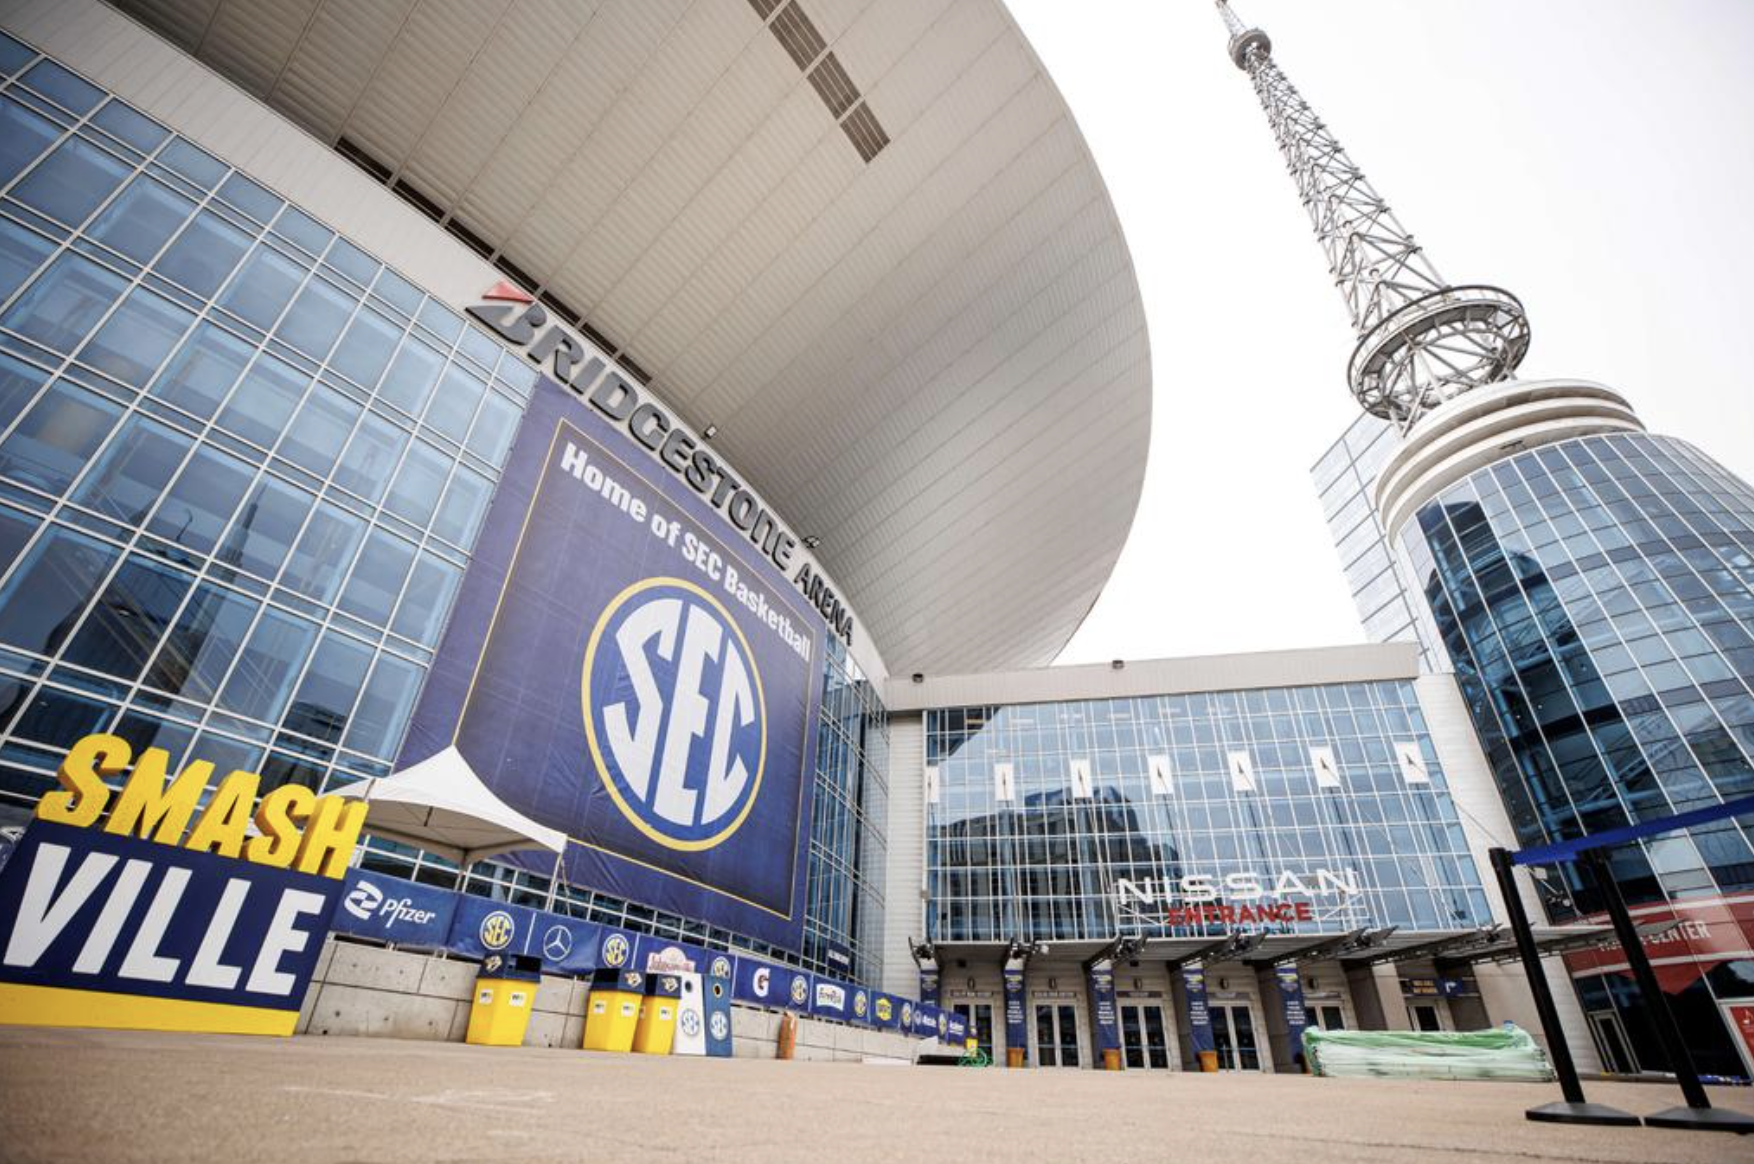 Bridgestone Arena in Nashville, Tennessee, the host site of the 2023 SEC Men's Basketball Tournament.